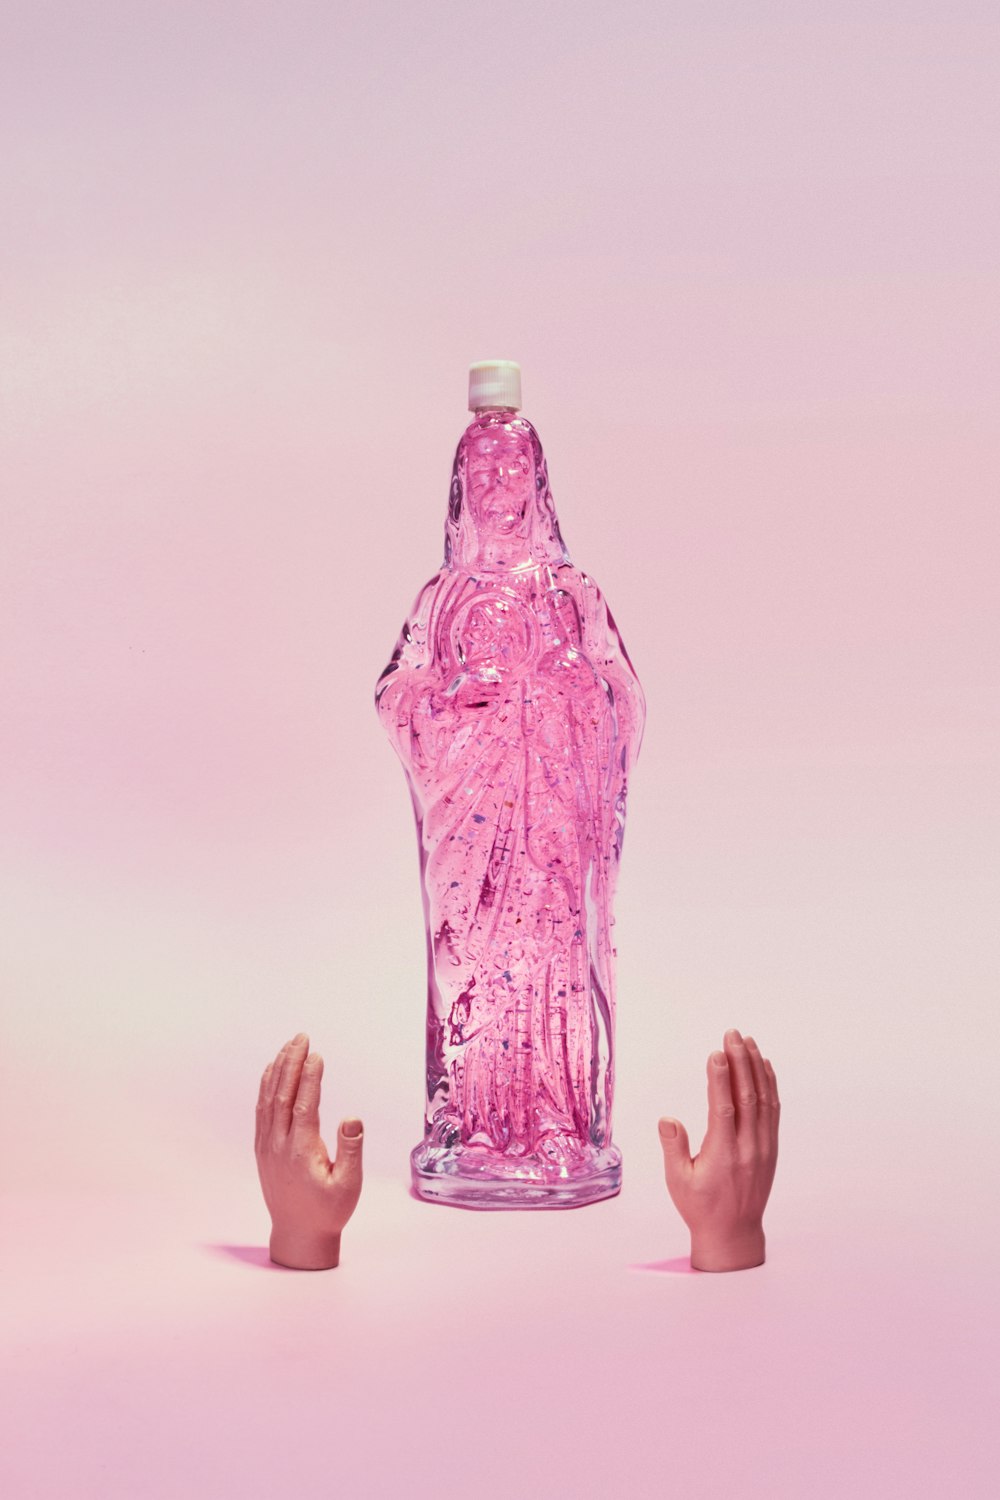 pessoa segurando garrafa de plástico roxa